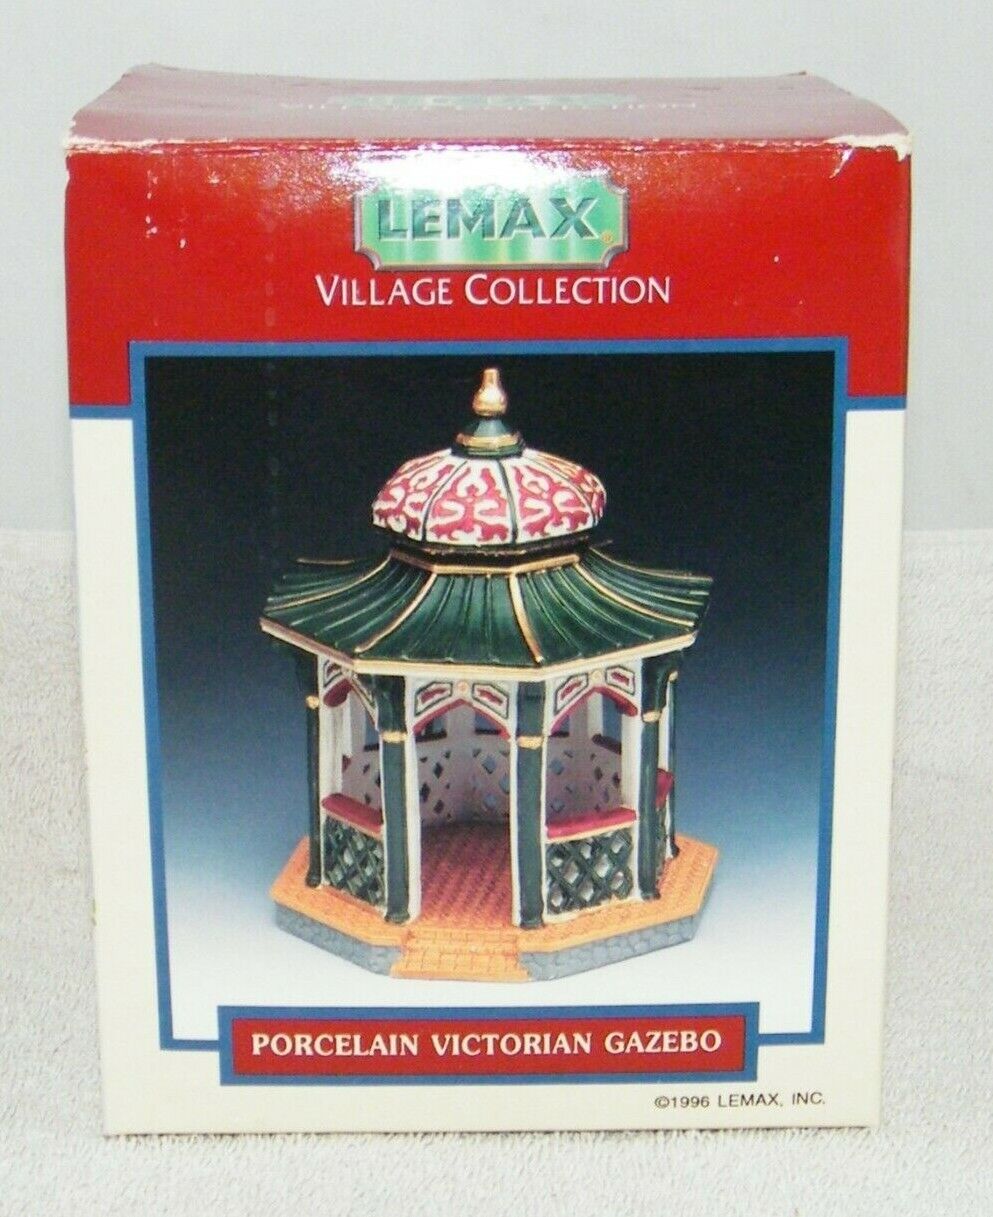 NEW 1996 LEMAX VILLAGE COLLECTION PORCELAIN VICTORIAN GAZEBO 